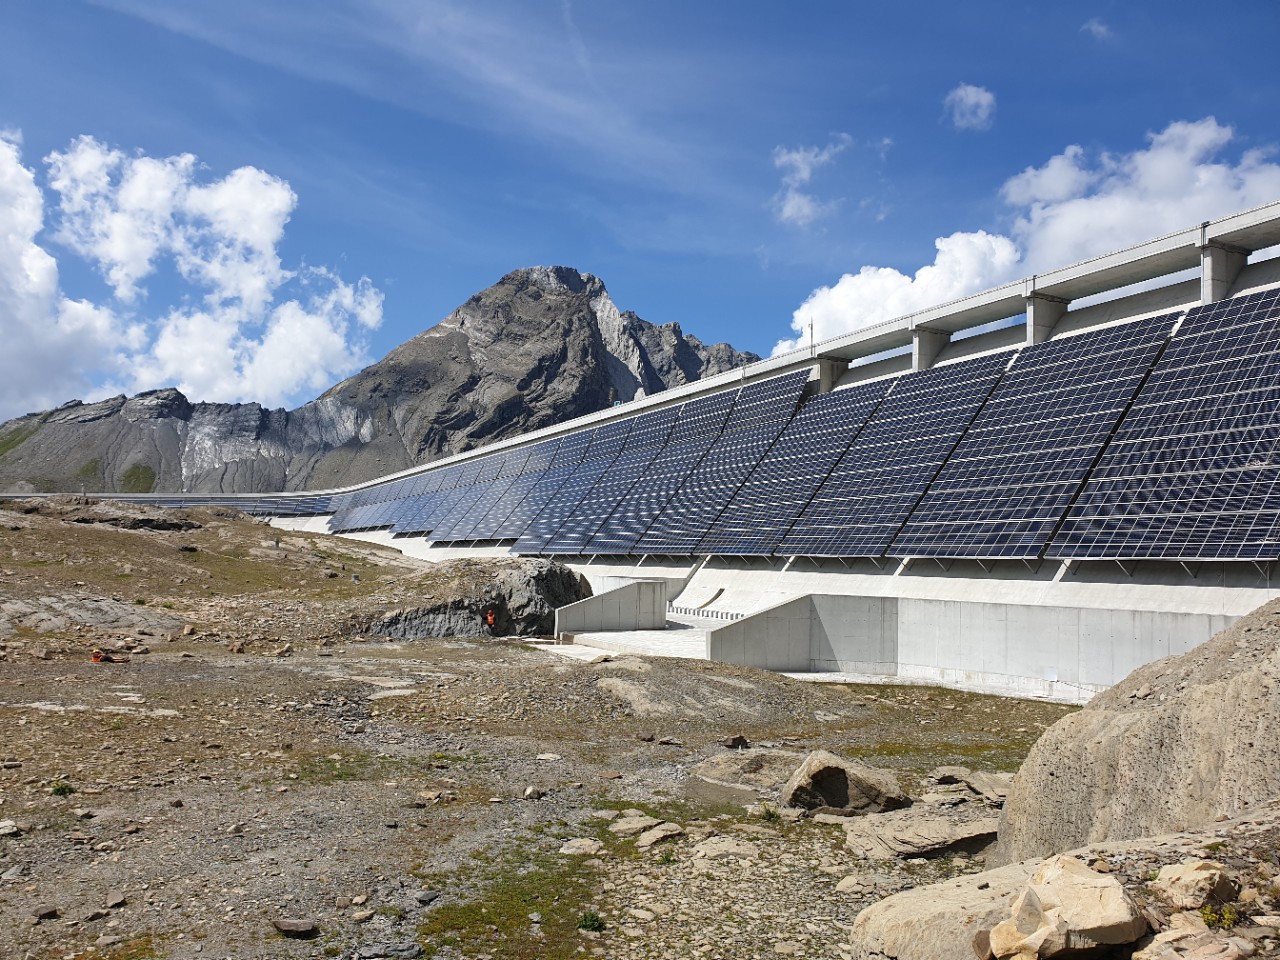 The largest alpine solar plant in Switzerland